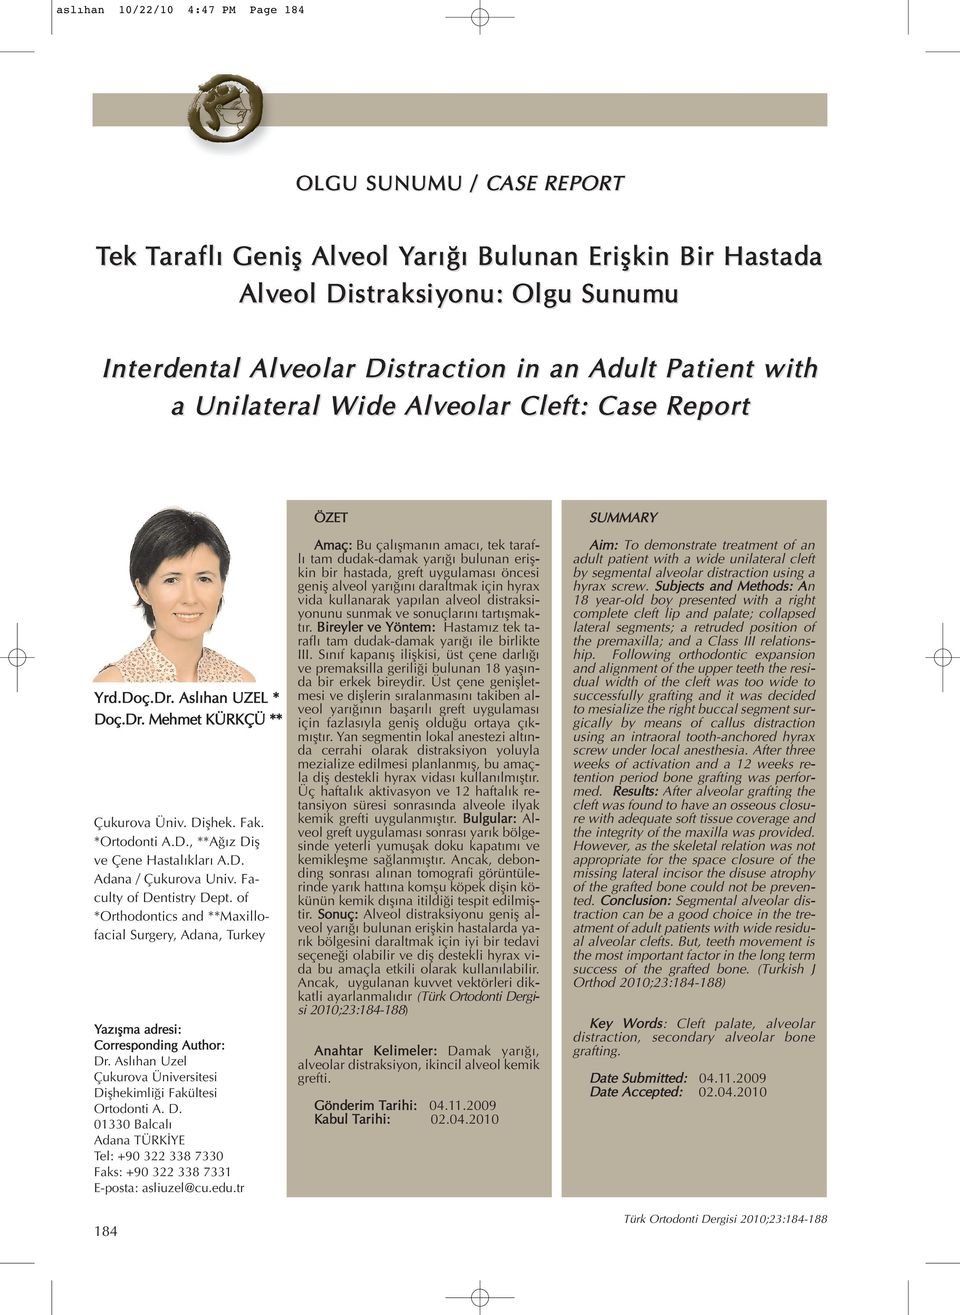 D. Adana / Çukurova Univ. Faculty of Dentistry Dept. of *Orthodontics and **Maxillofacial Surgery, Adana, Turkey Yaz flma adresi: Corresponding Author: Dr.